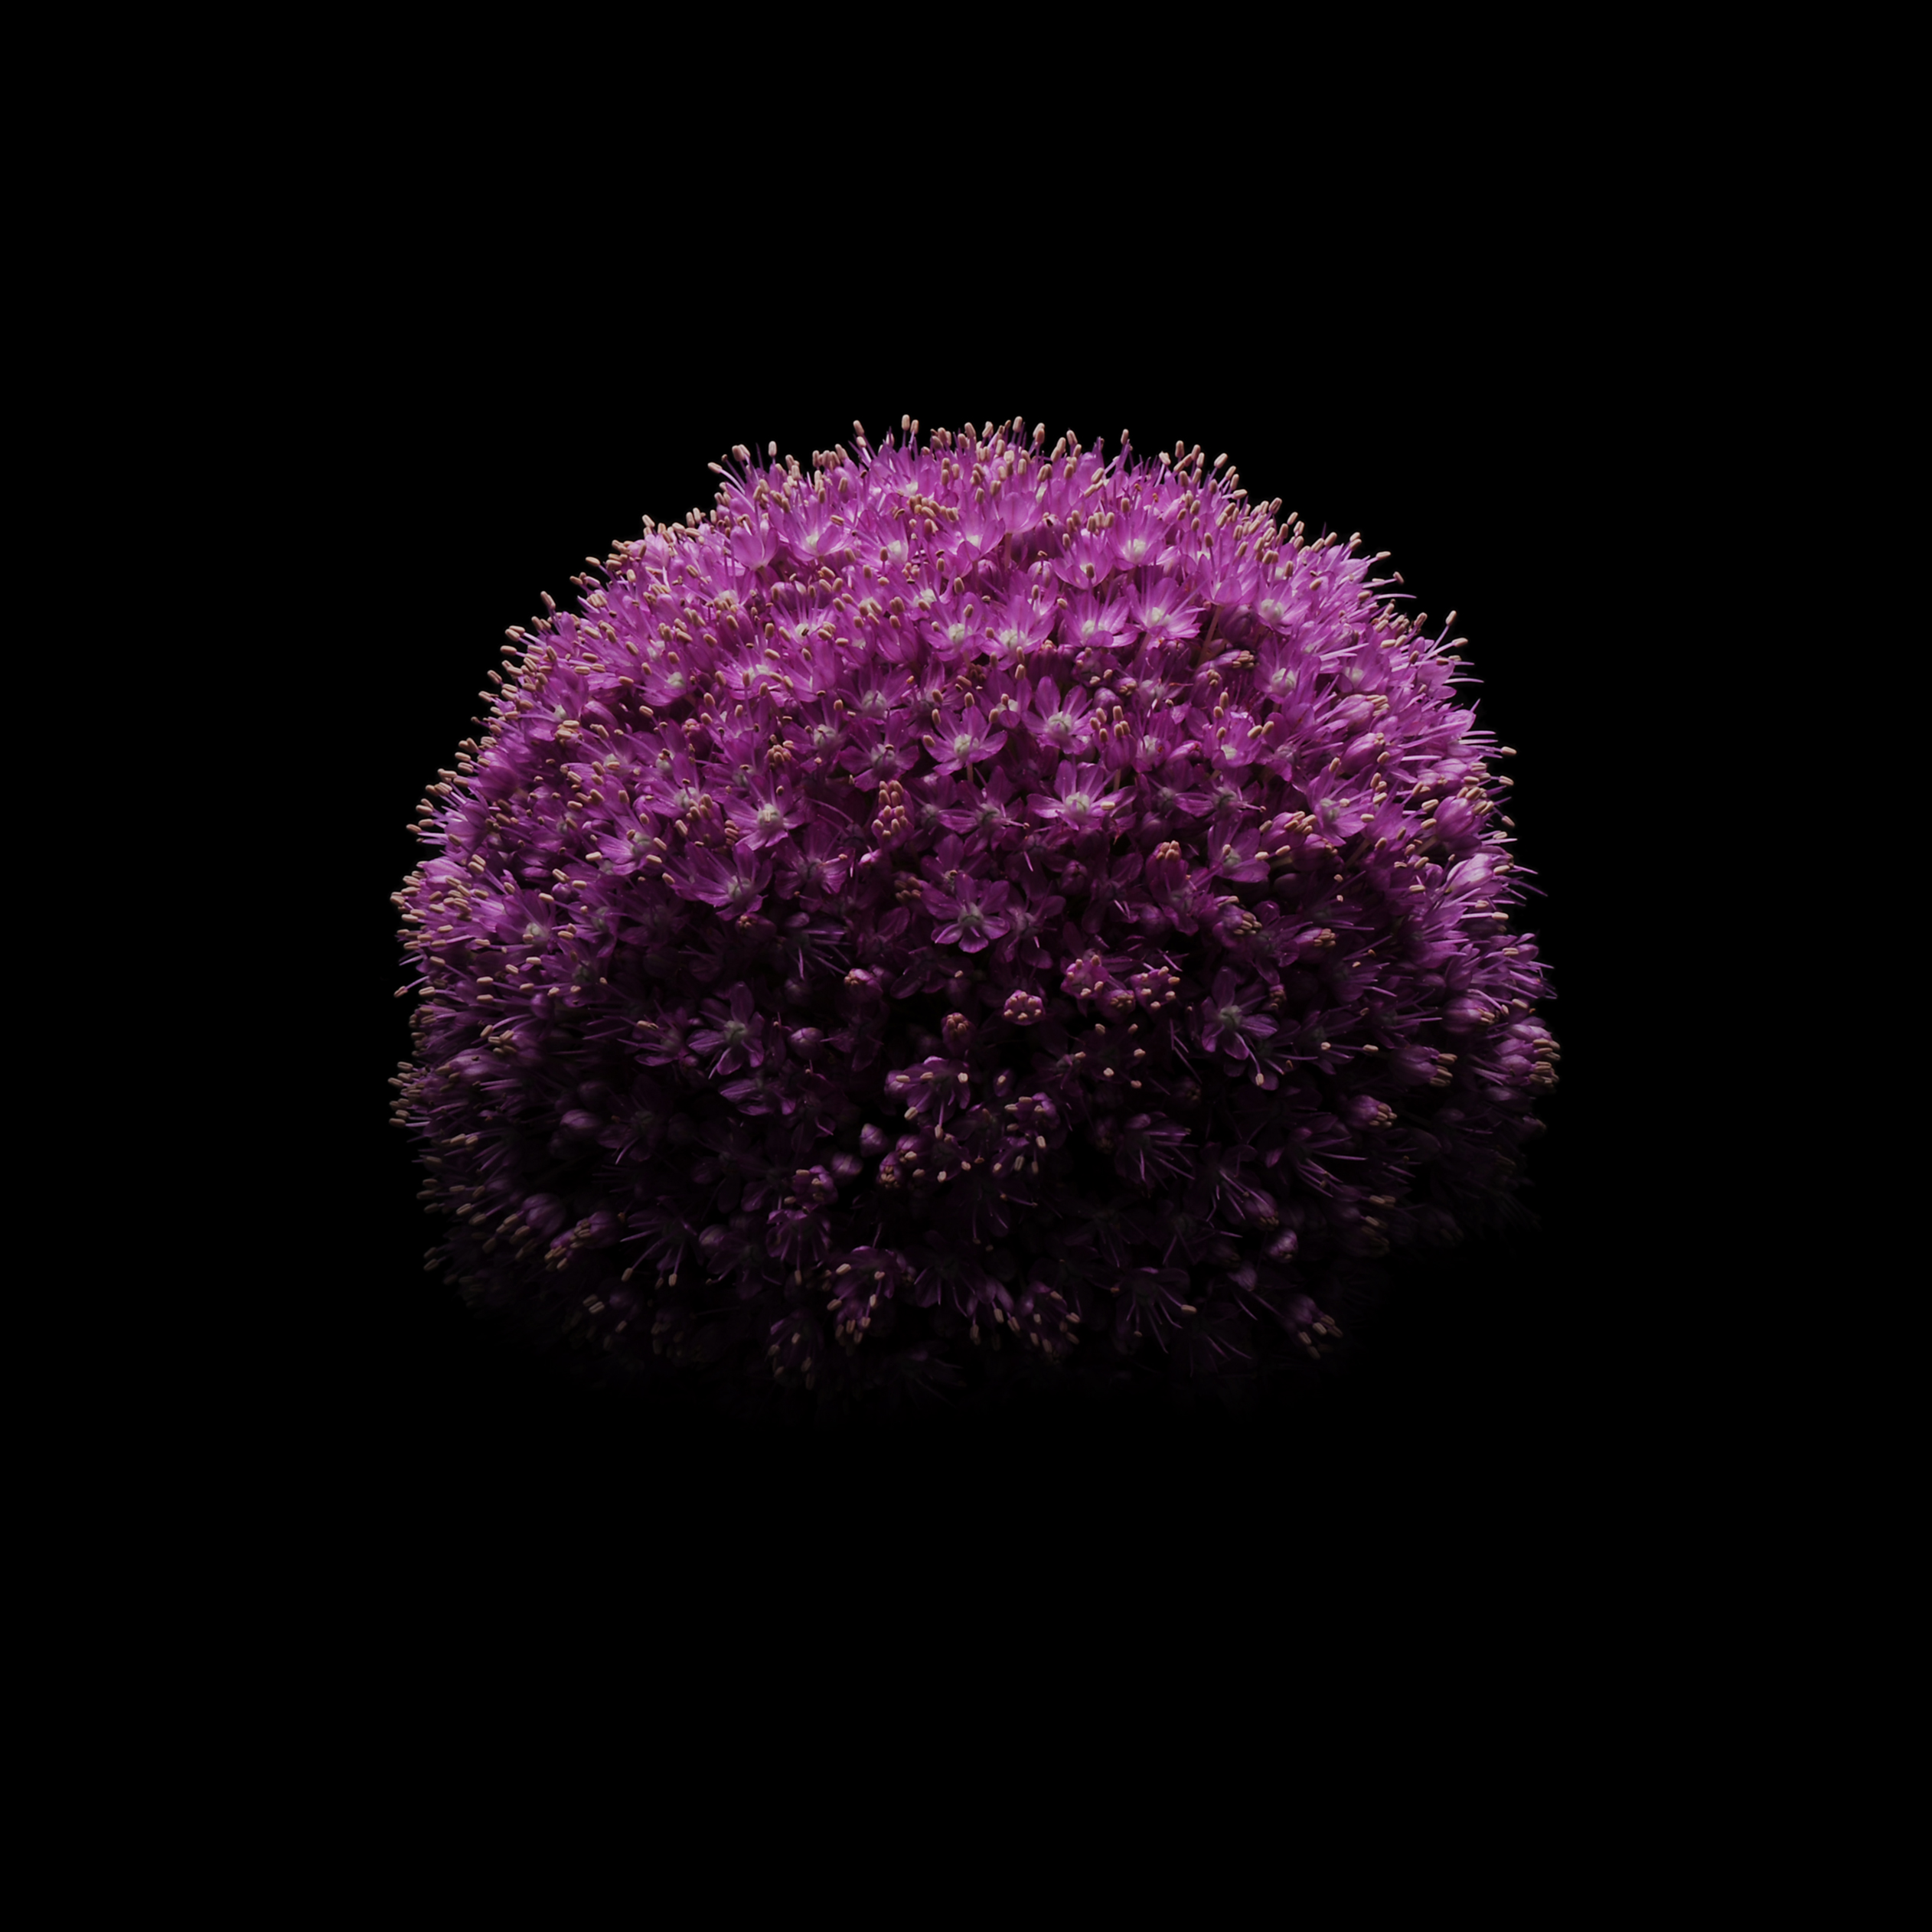 descarga de imagen de fondo de pantalla,violeta,púrpura,lila,planta,noche